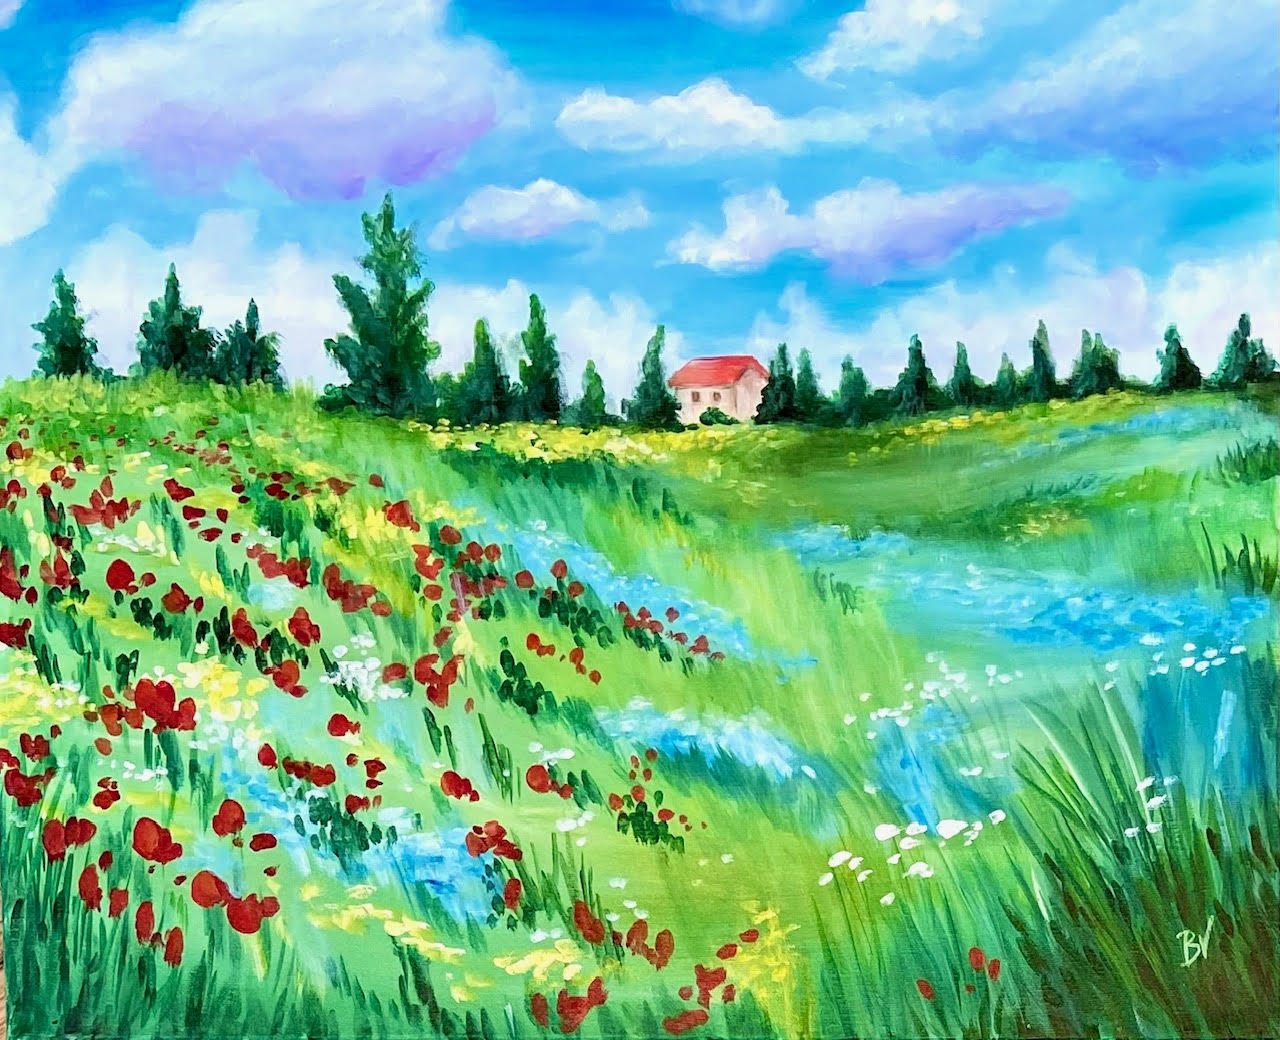 Monet's Flower Field at 1pm